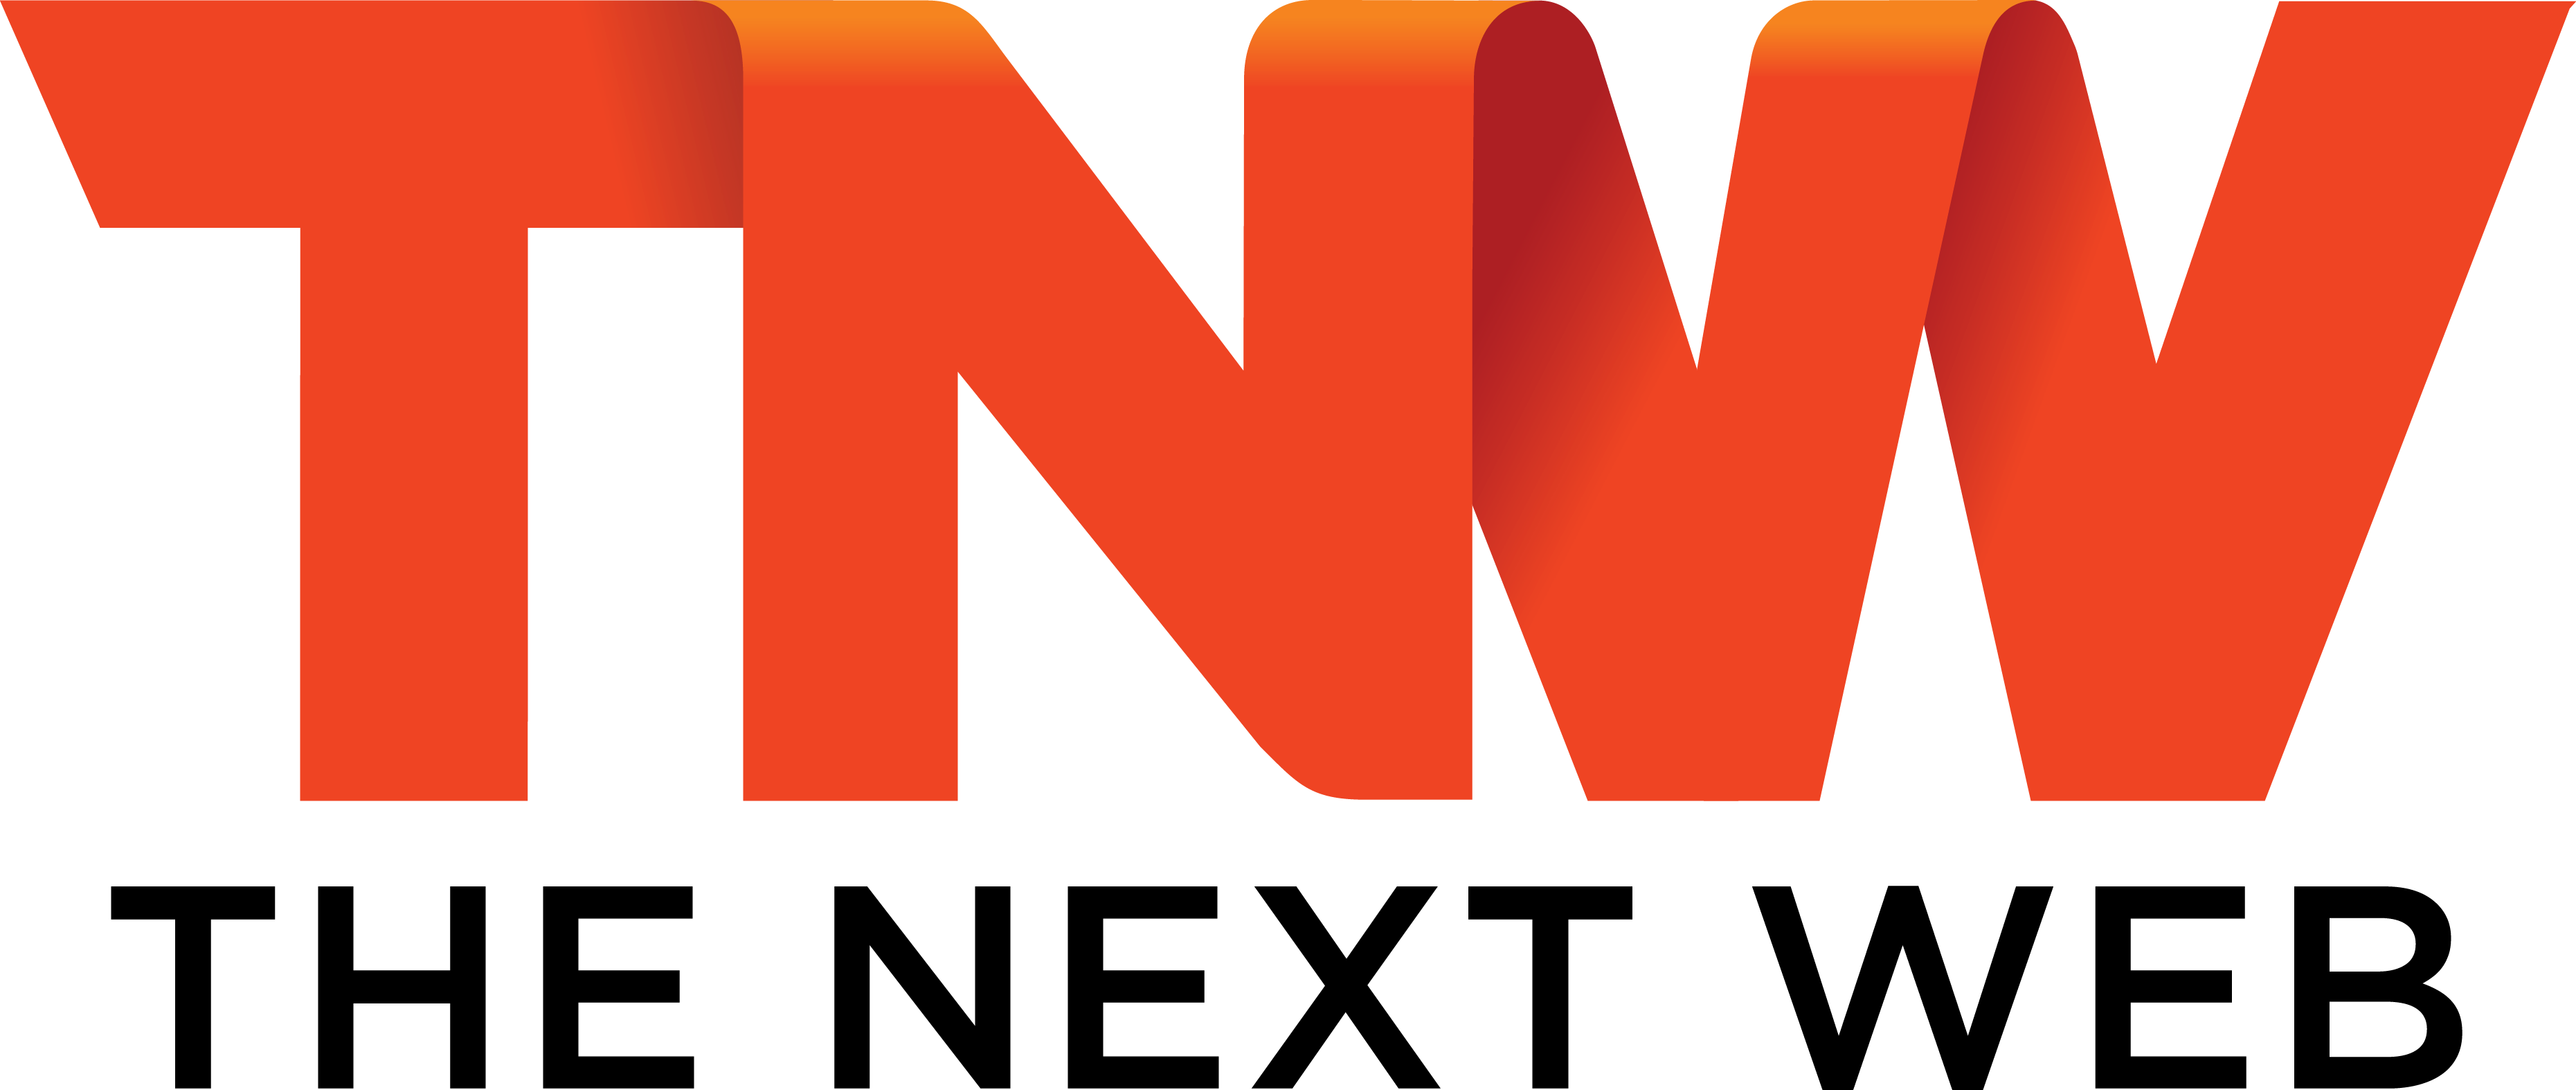 https://vivacitylabs.com/north-america/wp-content/uploads/2021/01/the-next-web-logo.png